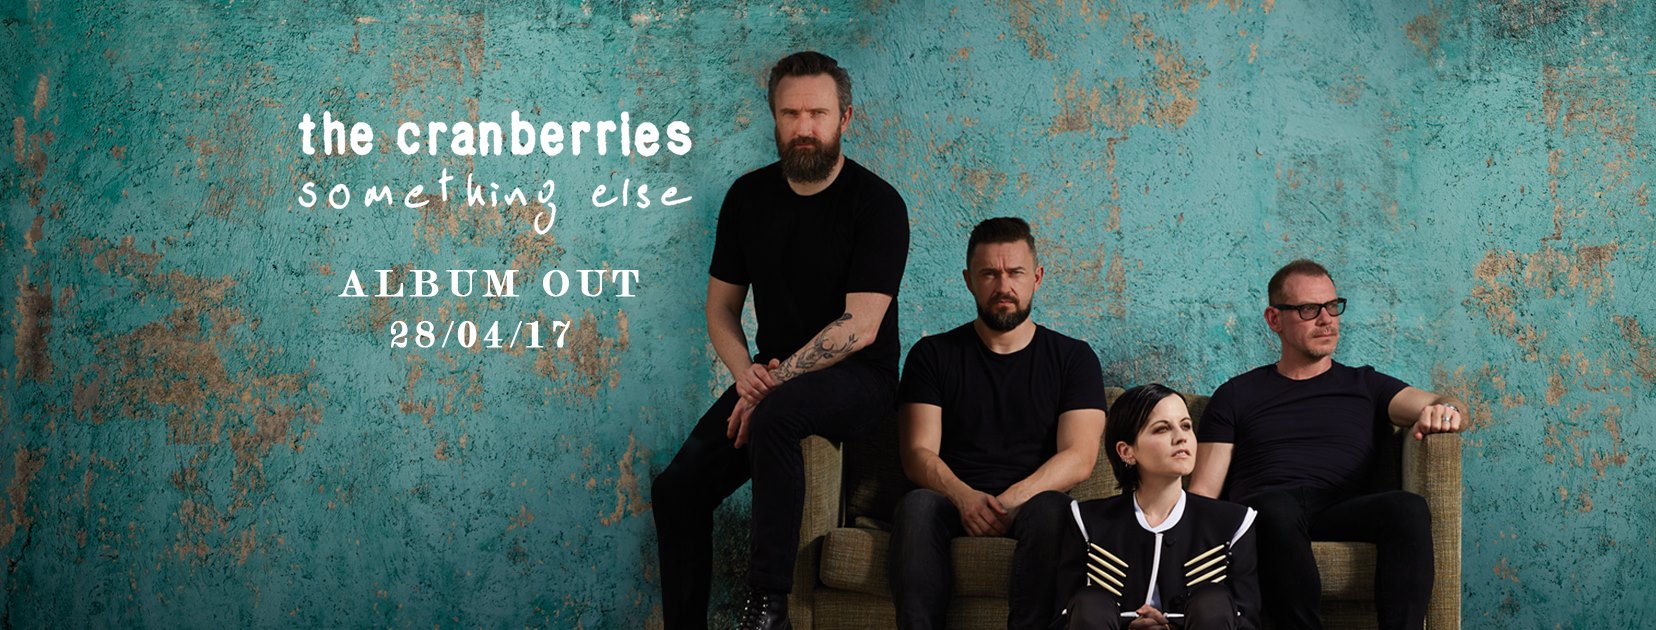 The Cranberries New Album out April 28th